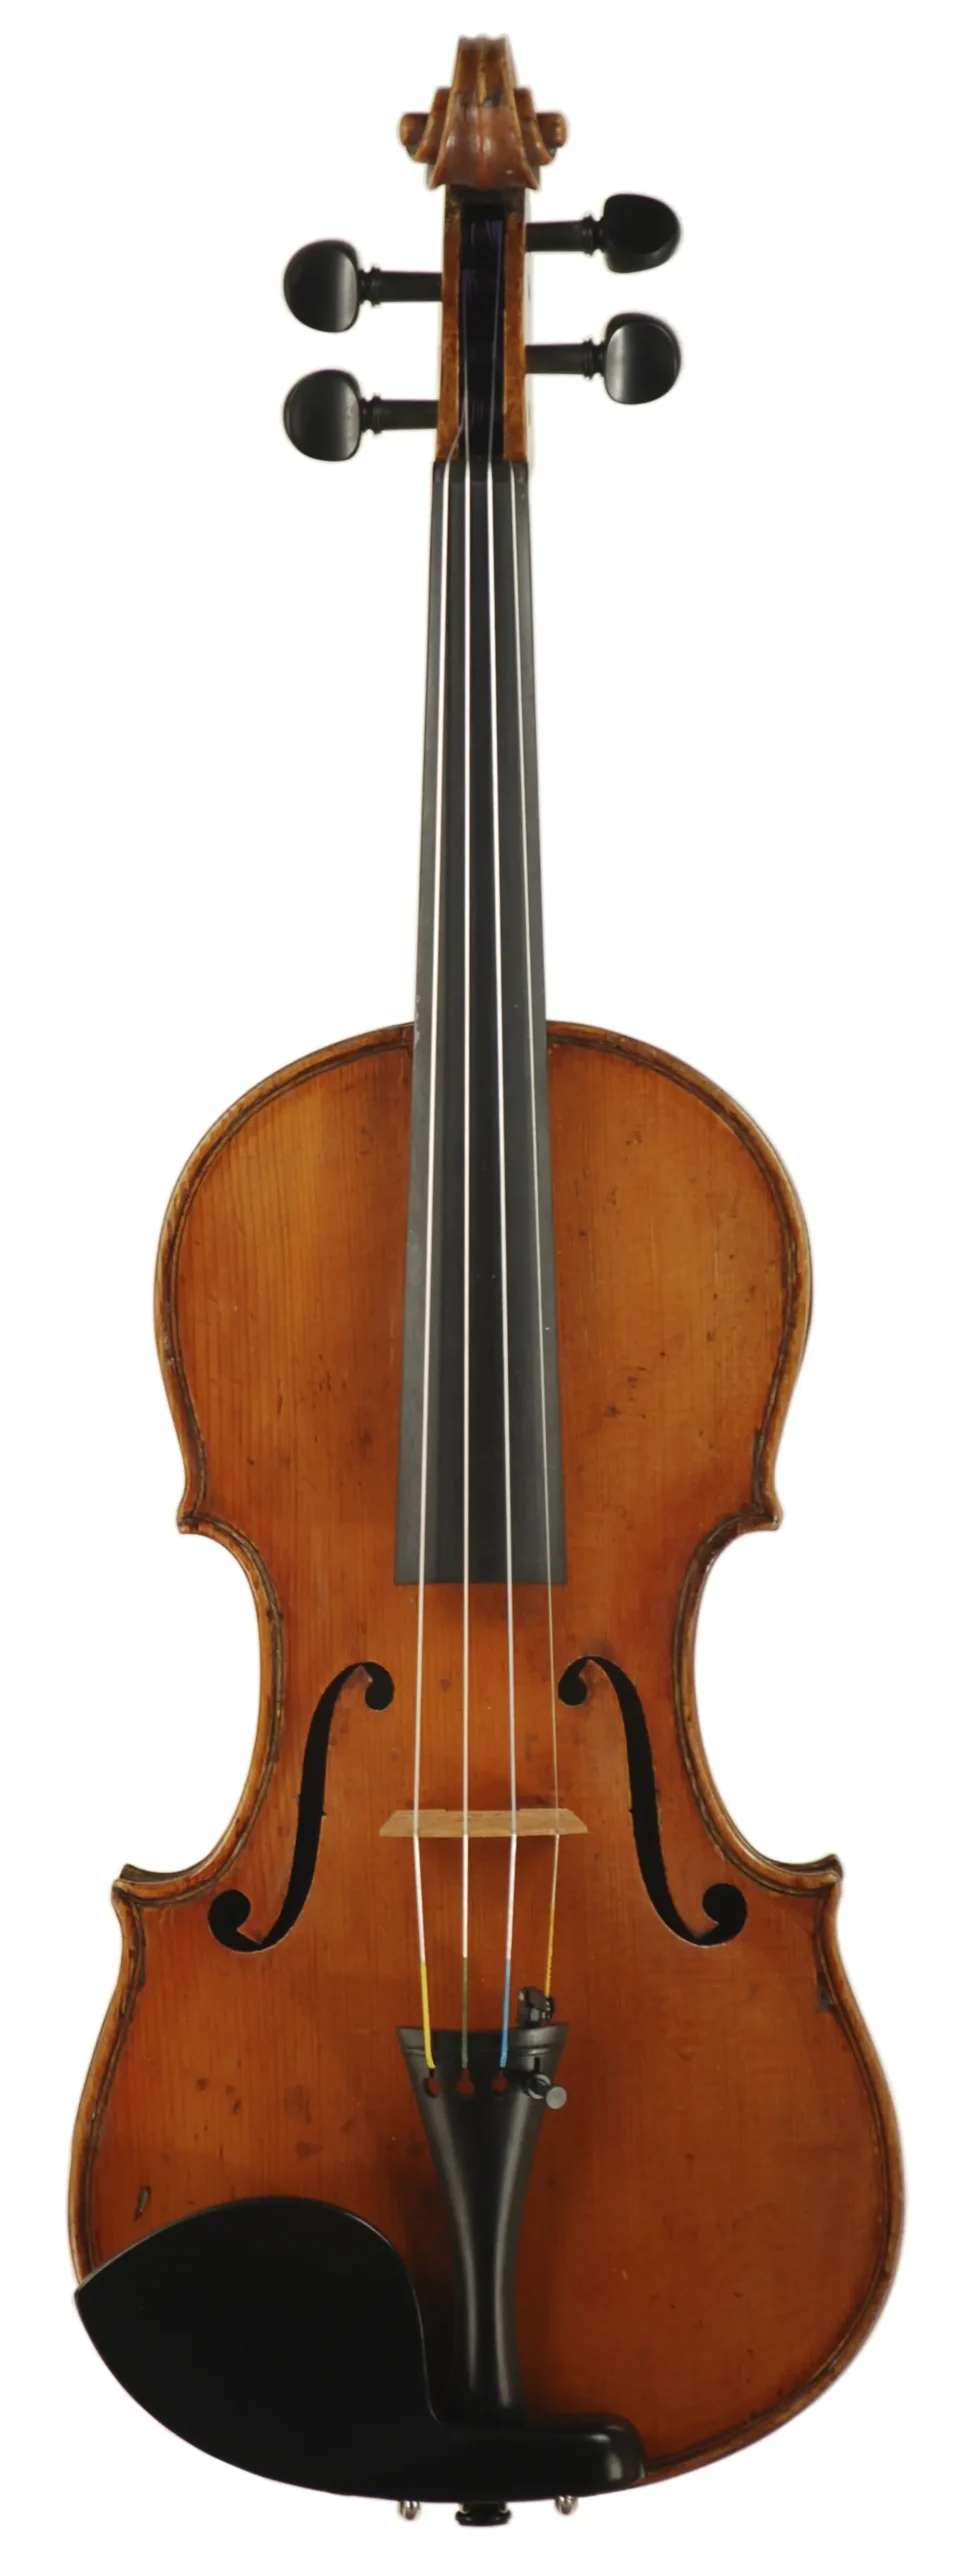 italian violin - Who built the most famous Italian violin